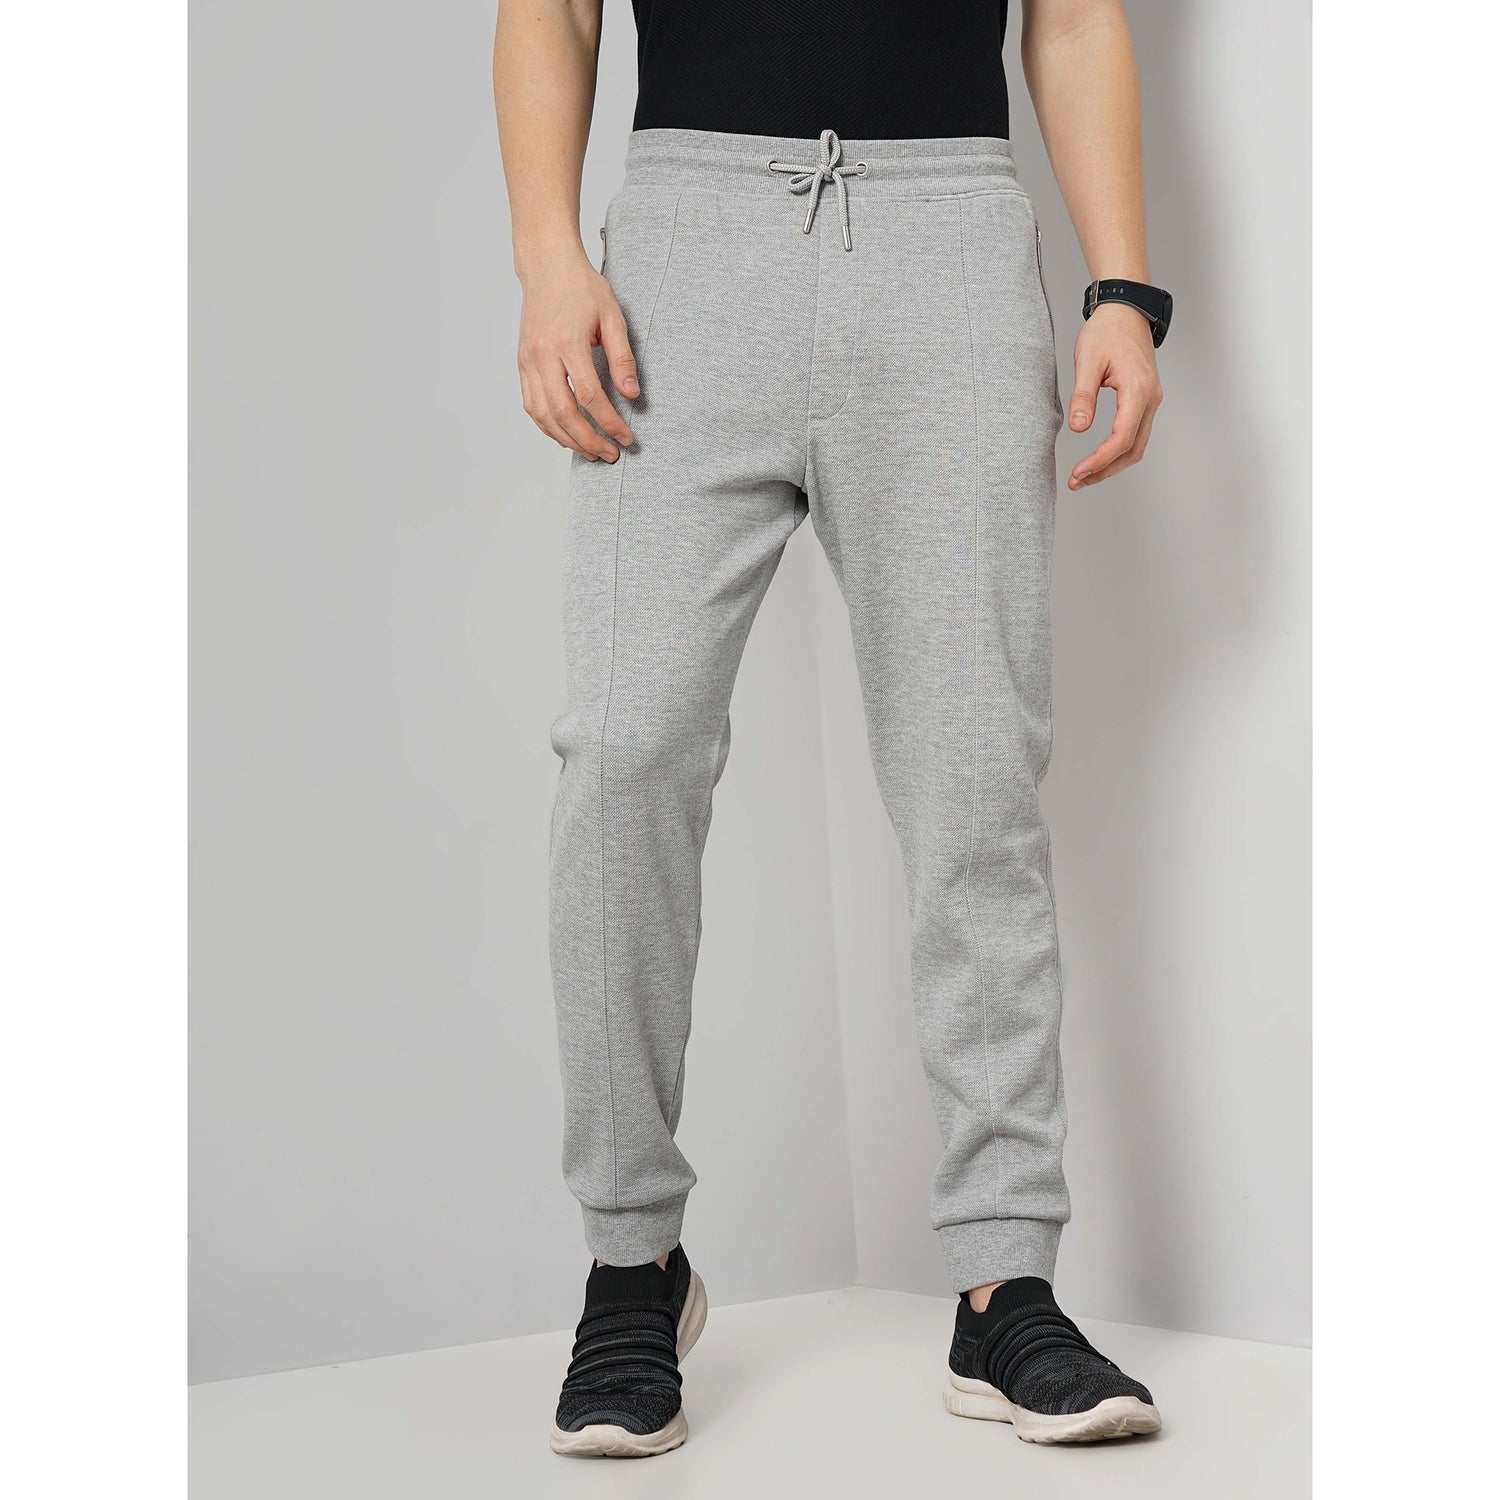 Men's Grey Solid Regular Fit Cotton Joggers Trousers (GOPIQUET)